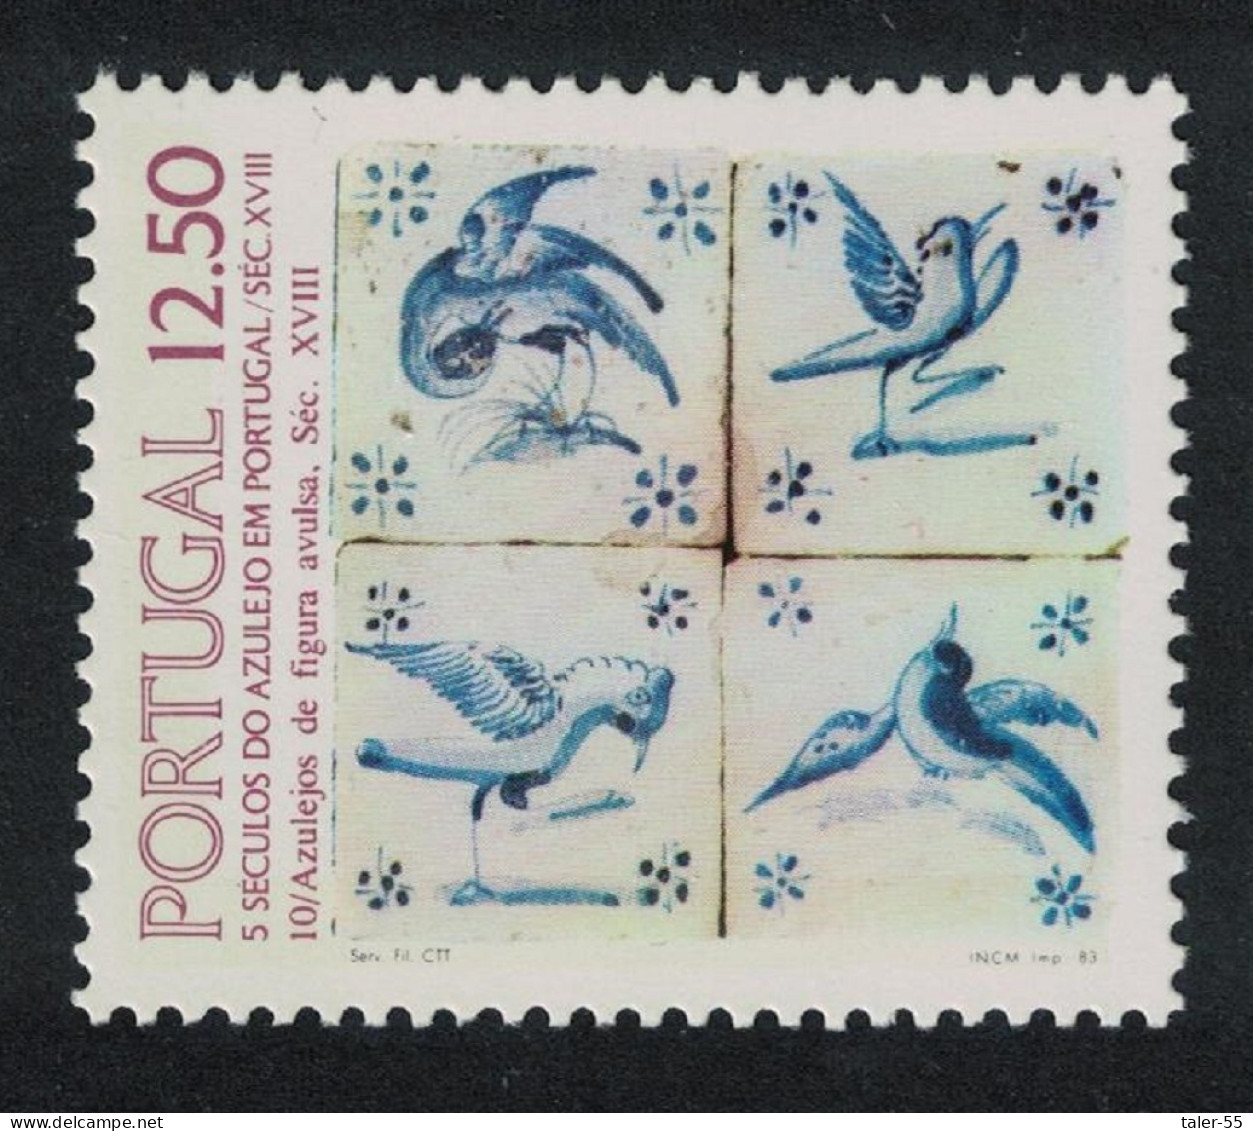 Portugal Birds Tiles 10th Series 1983 MNH SG#1926 - Neufs